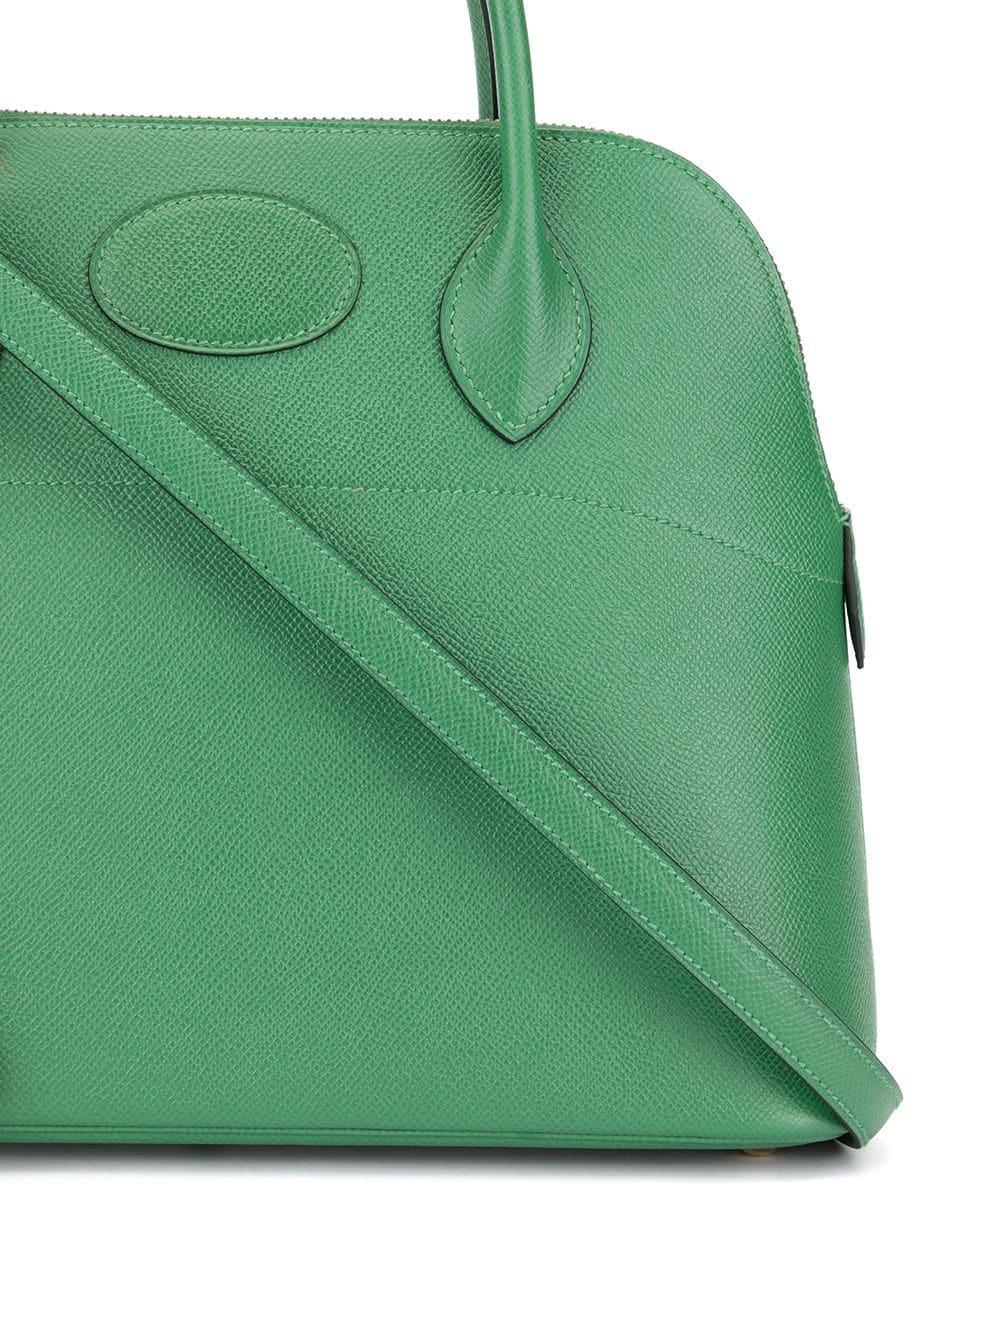 Hermes Bolide Womens Handbags, Green